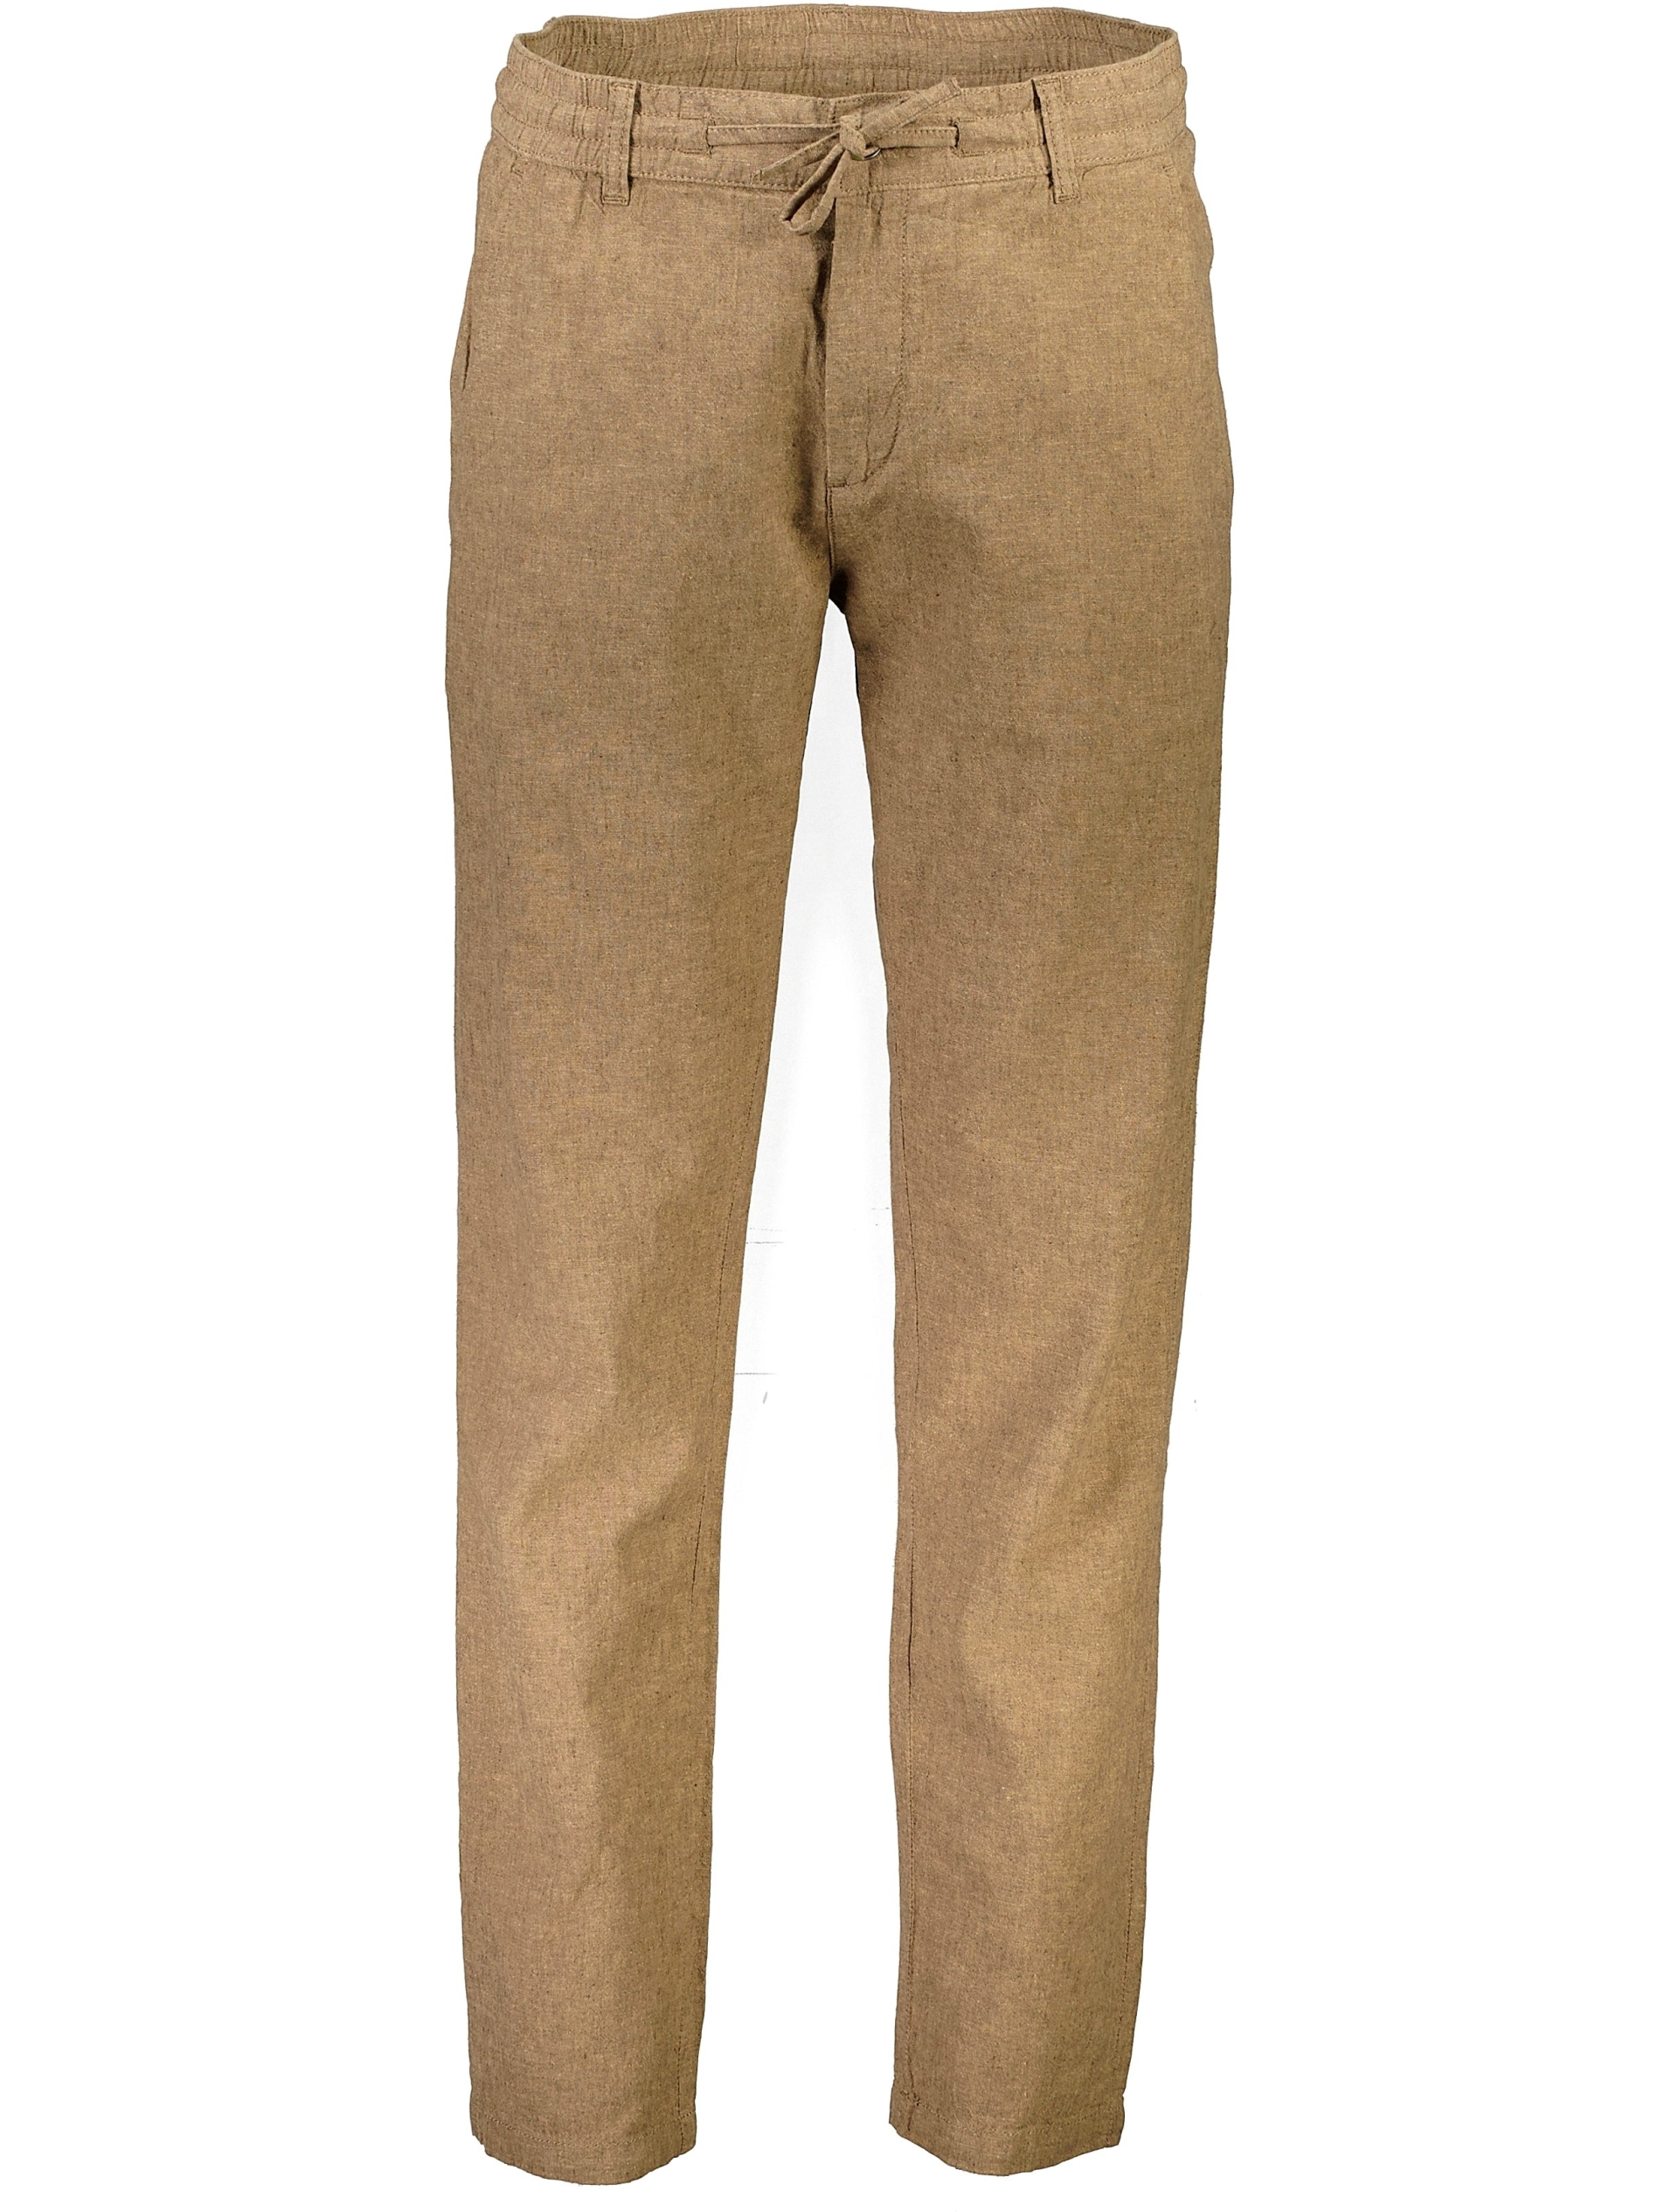 Lindbergh Linen pants grey / dk stone